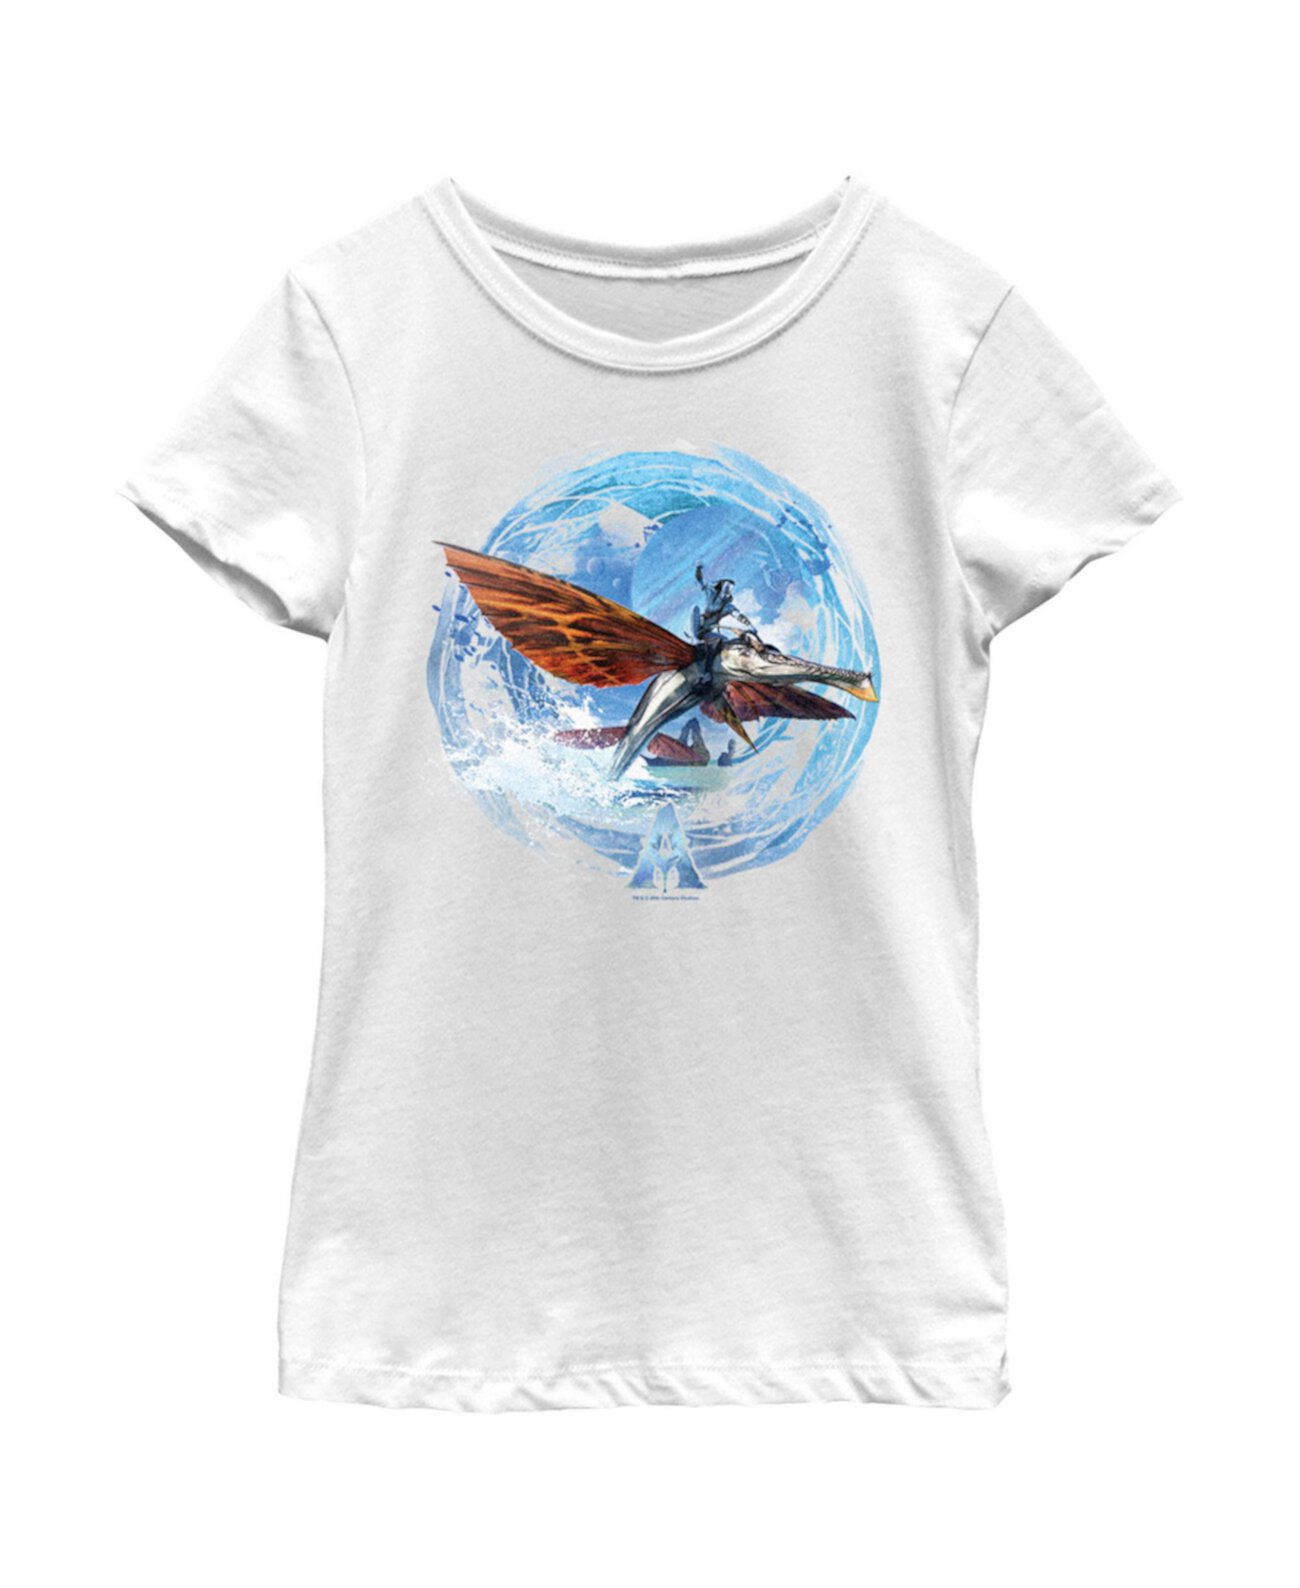 Girl's Avatar: The Way of Water Детская футболка с логотипом Tulkun Water Logo 20th Century Fox